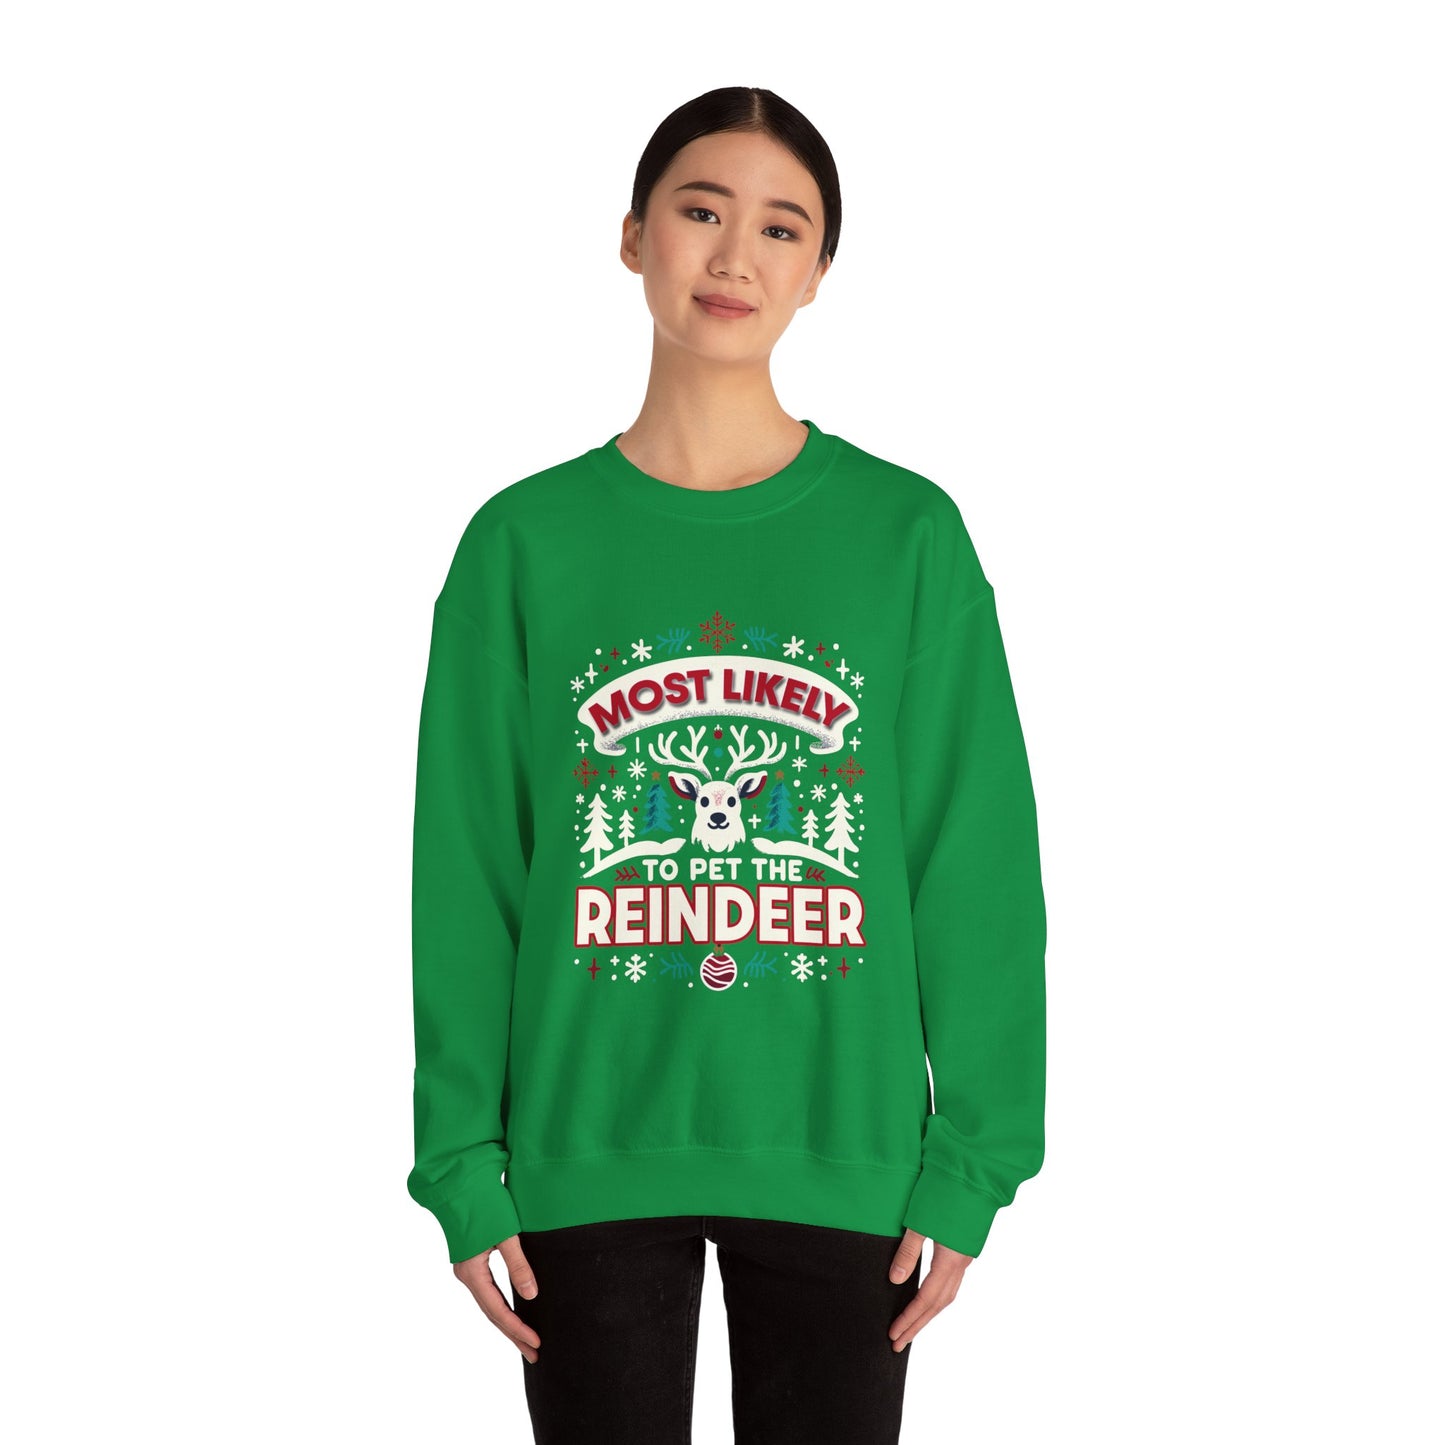 Most Likely to Pet the Reindeer Crewneck Sweatshirt